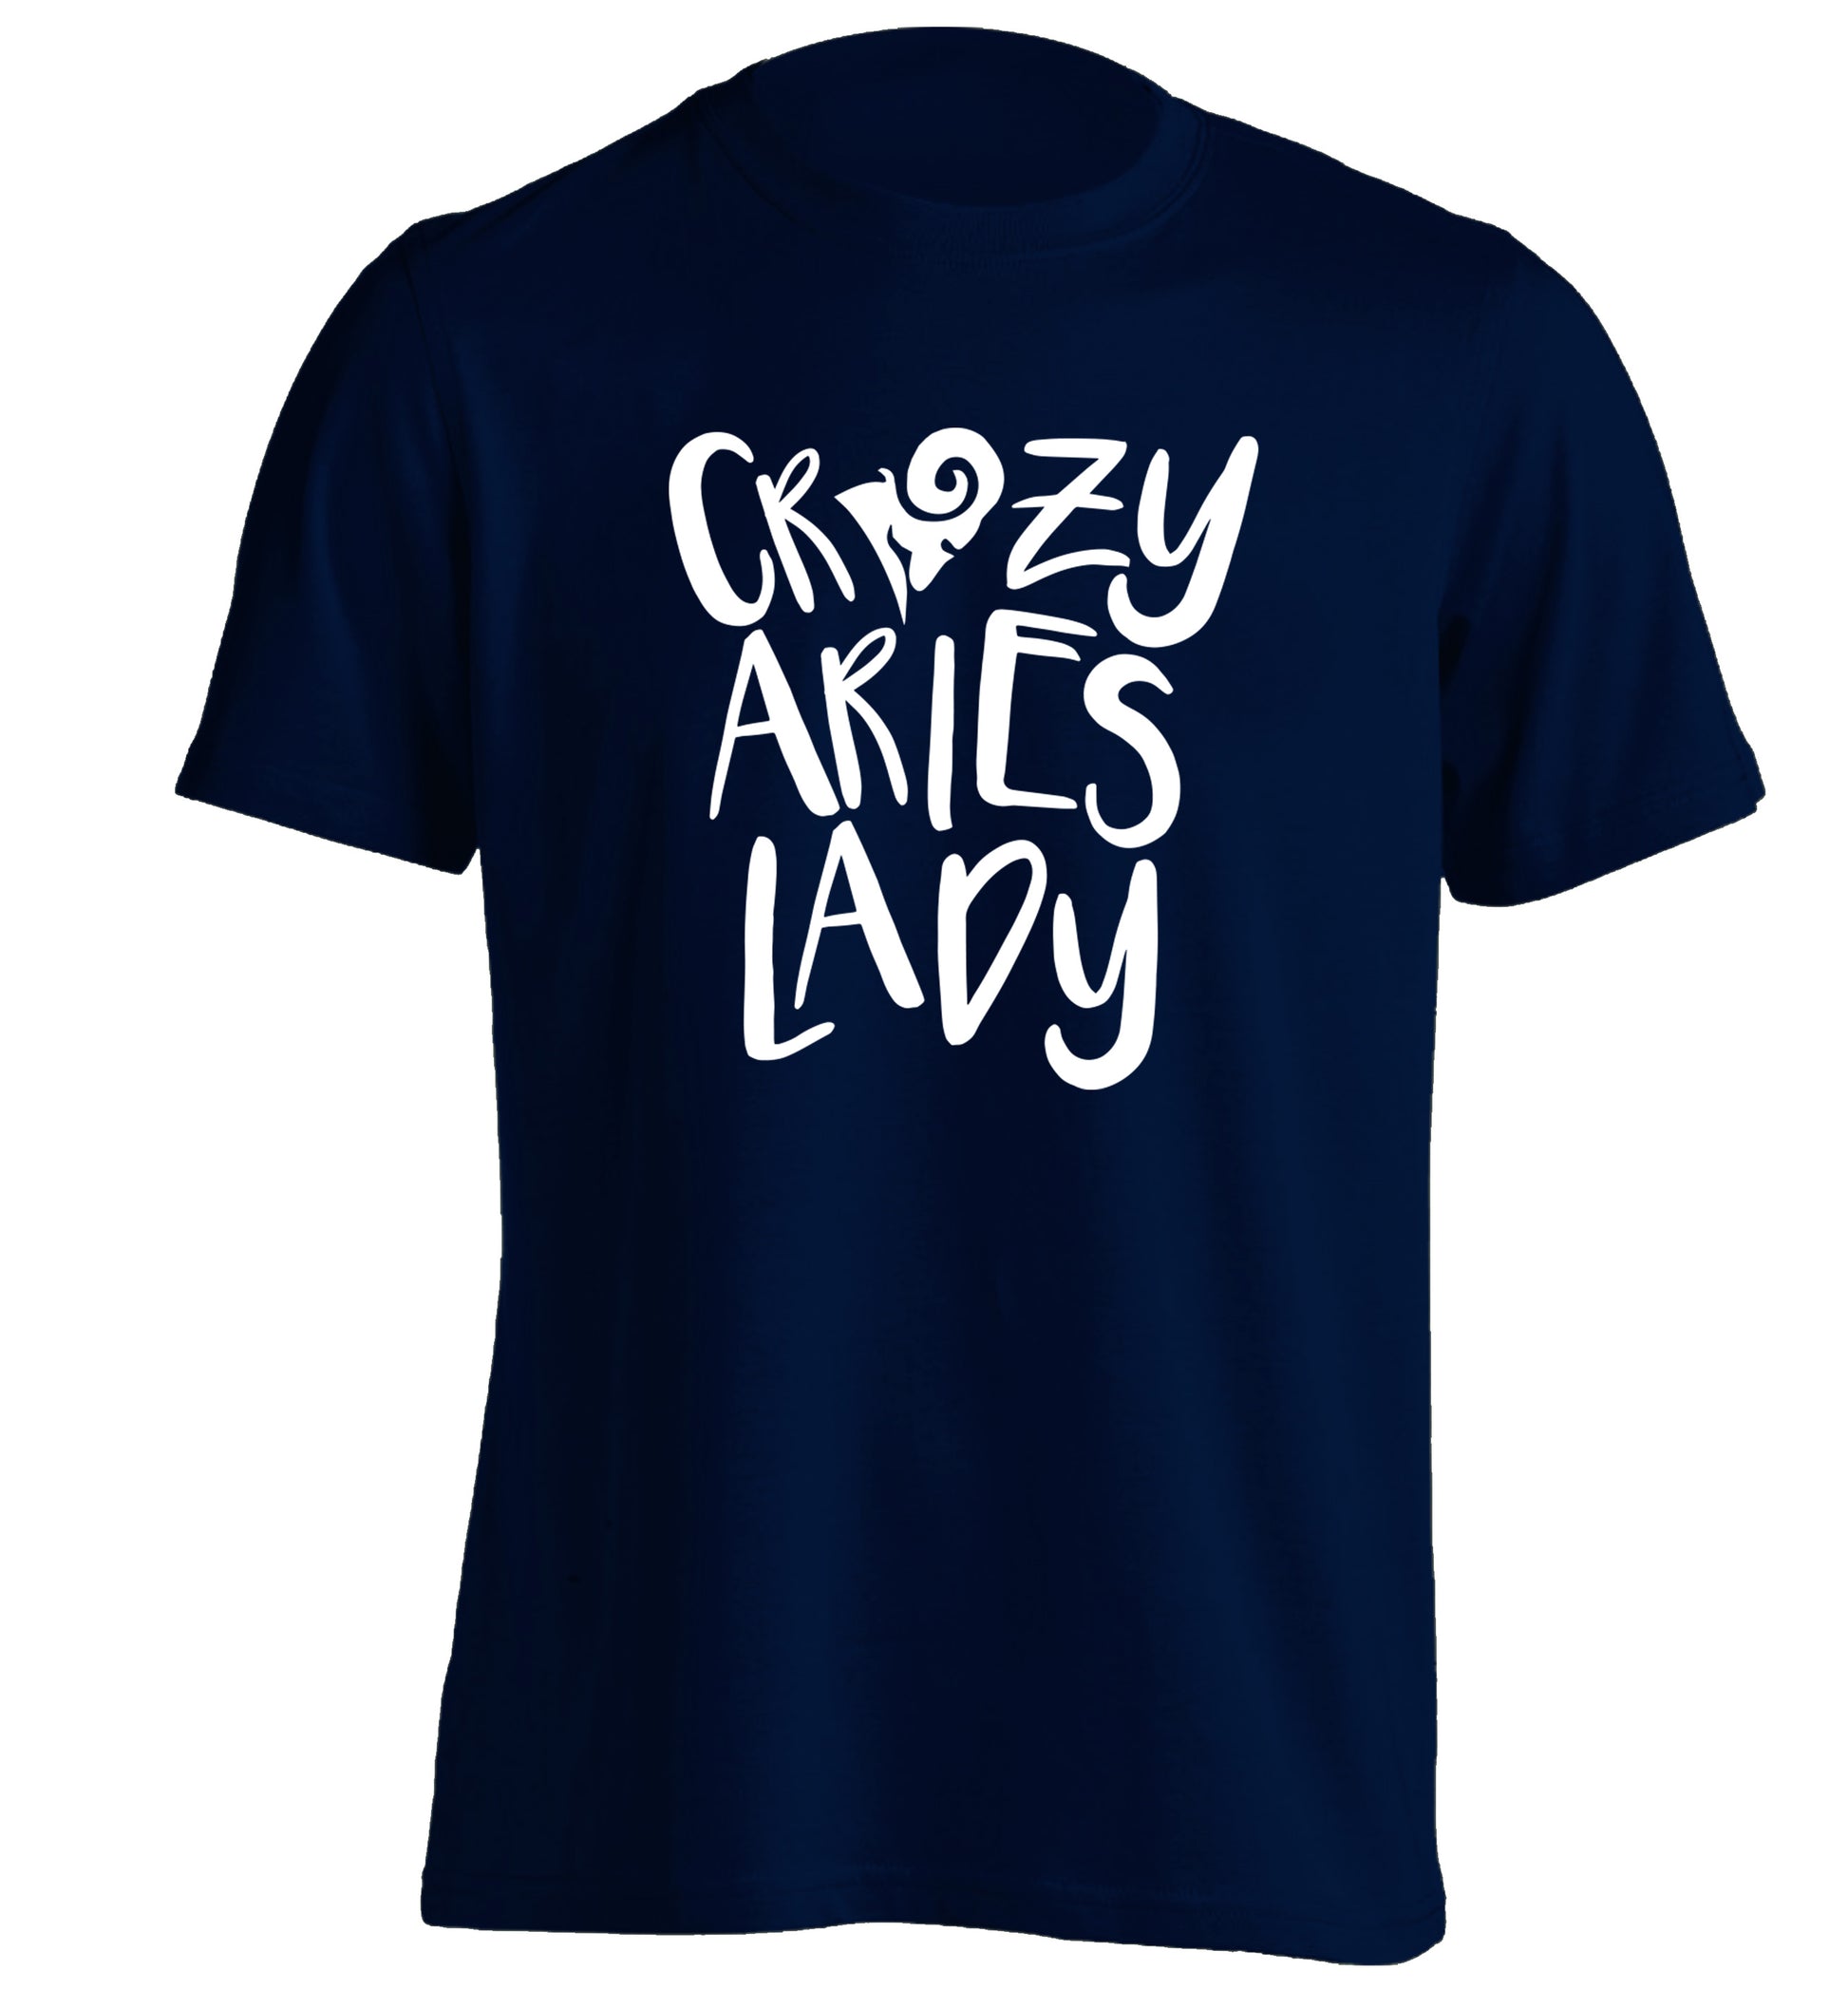 Crazy aries lady adults unisex navy Tshirt 2XL